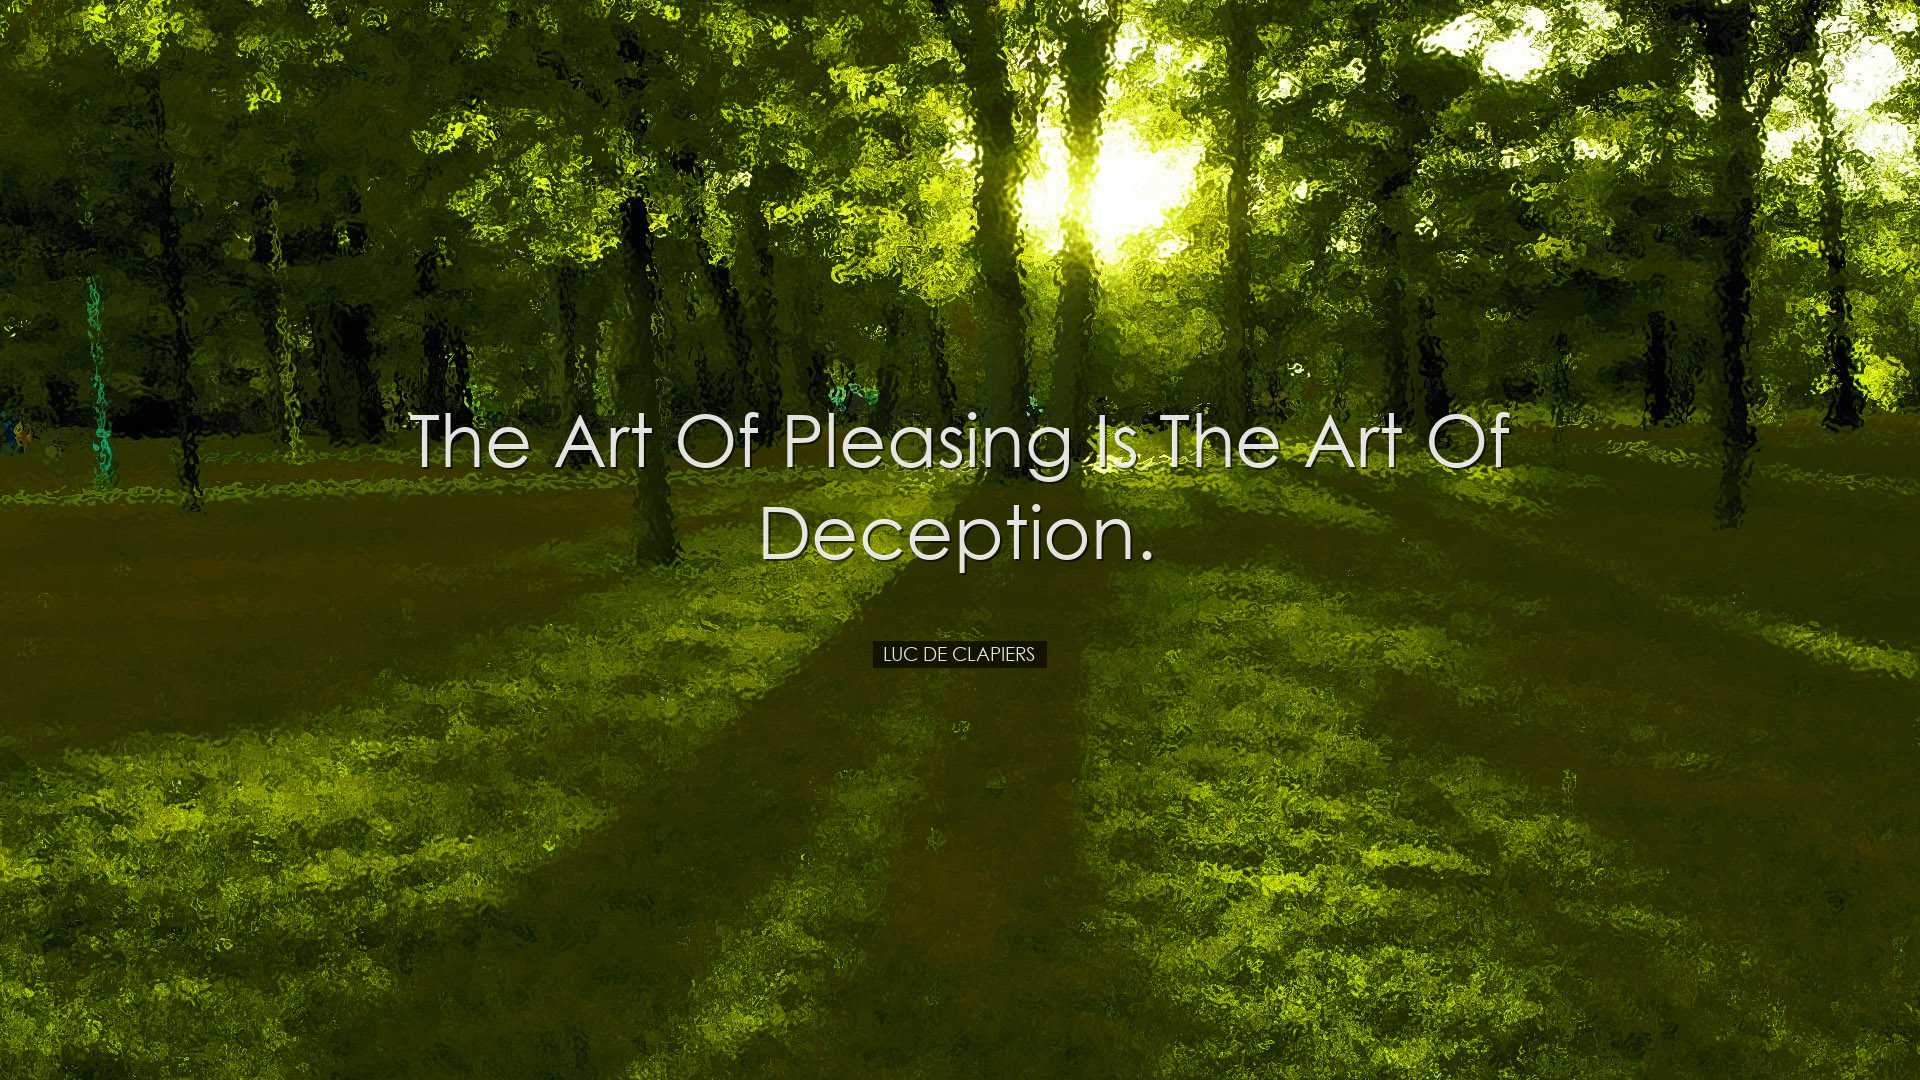 The art of pleasing is the art of deception. - Luc de Clapiers